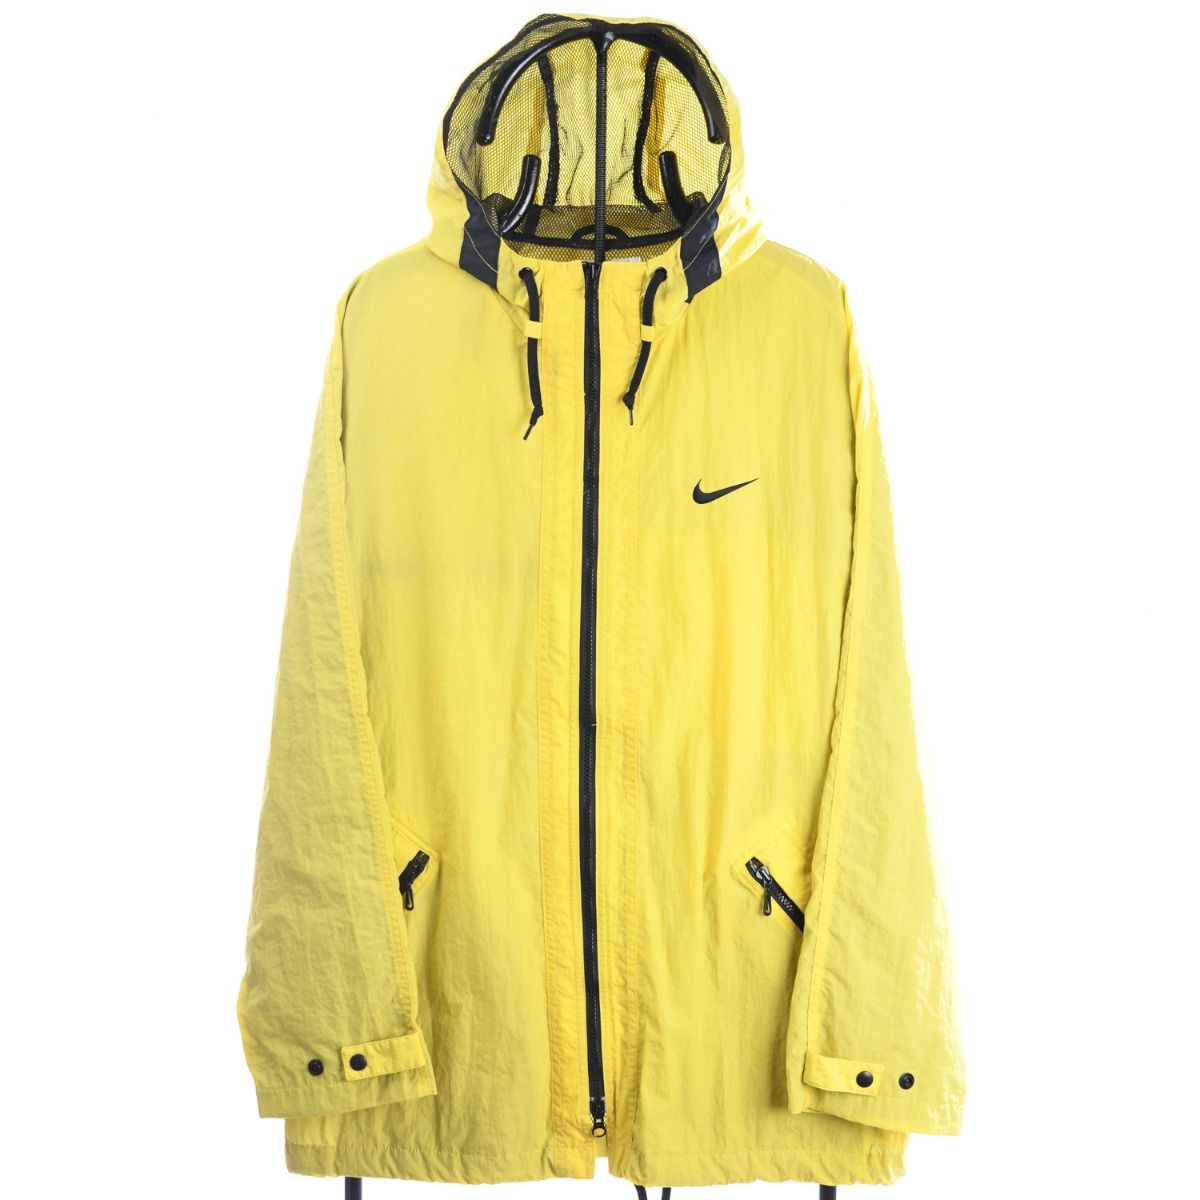 Nike 1990s Shell Yellow Jacket